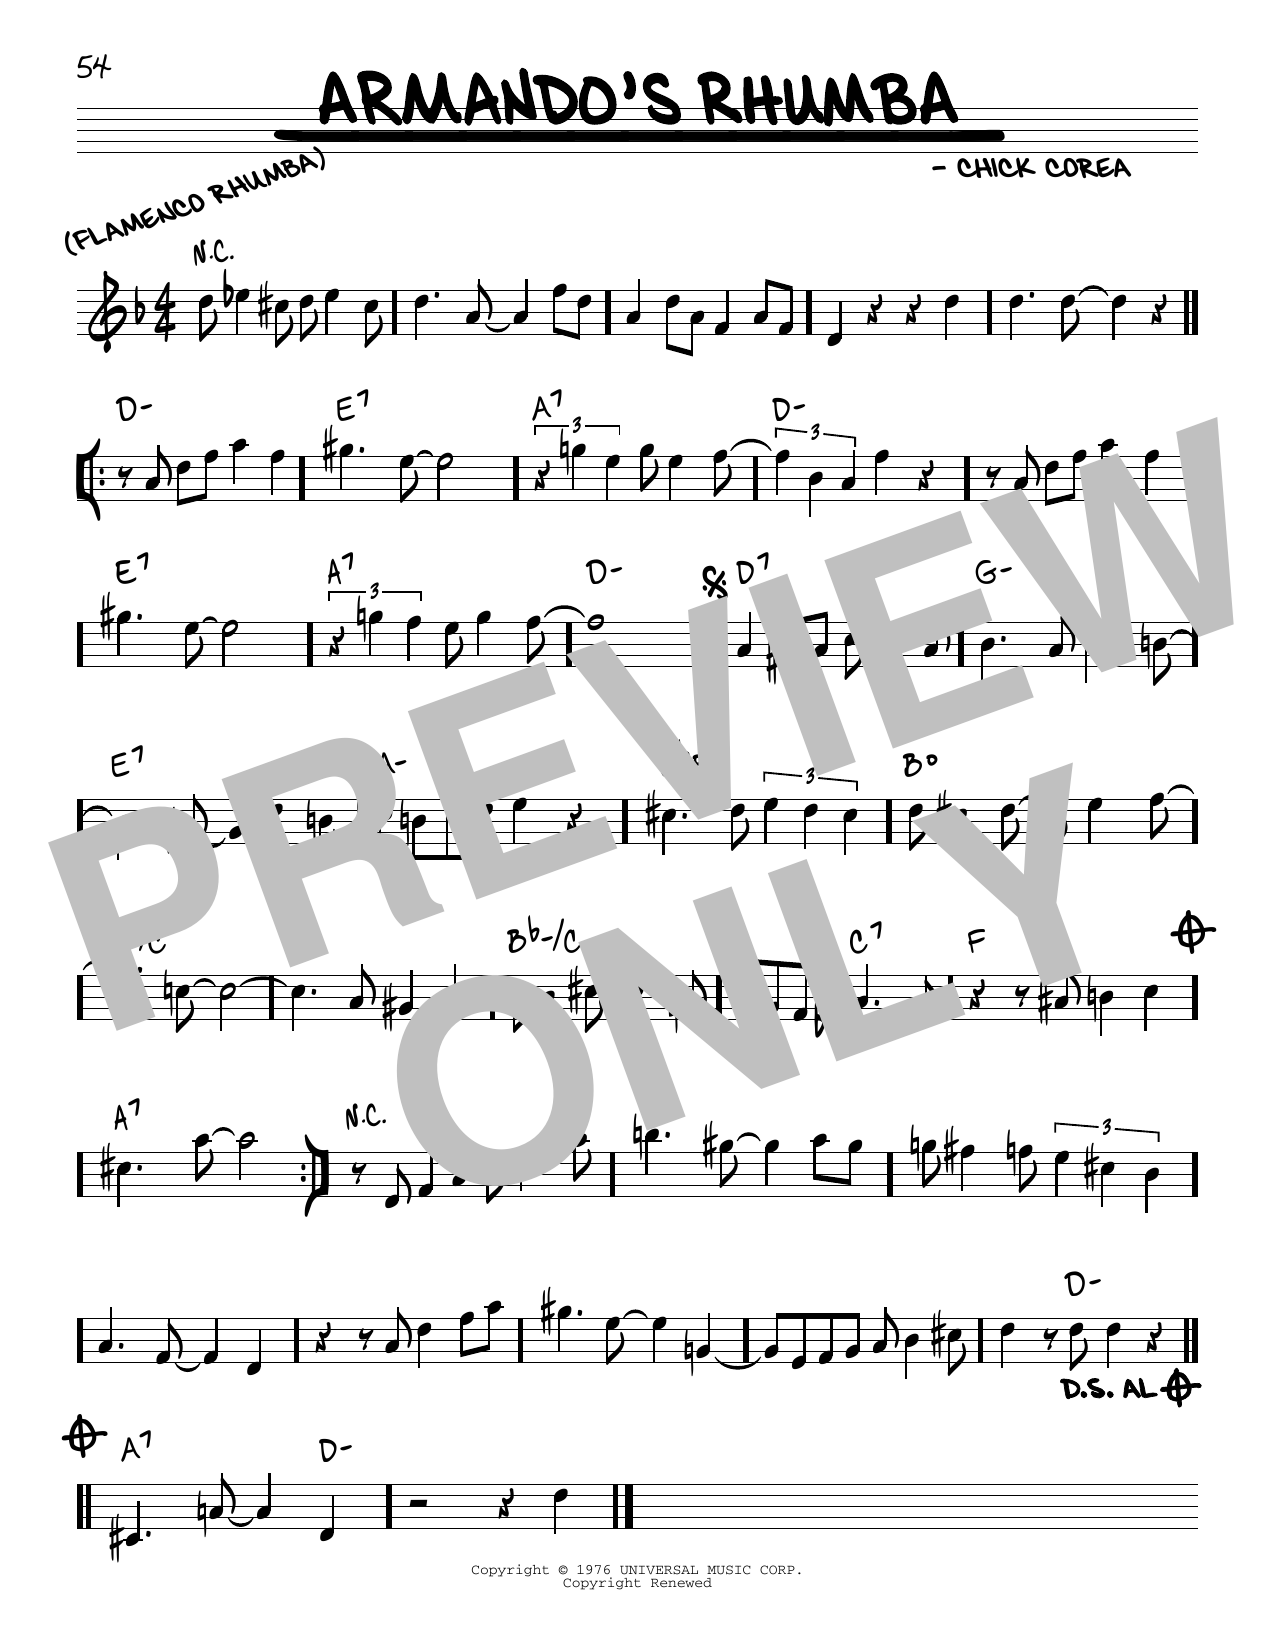 Chick Corea Armando's Rhumba Sheet Music Notes & Chords for Piano Transcription - Download or Print PDF